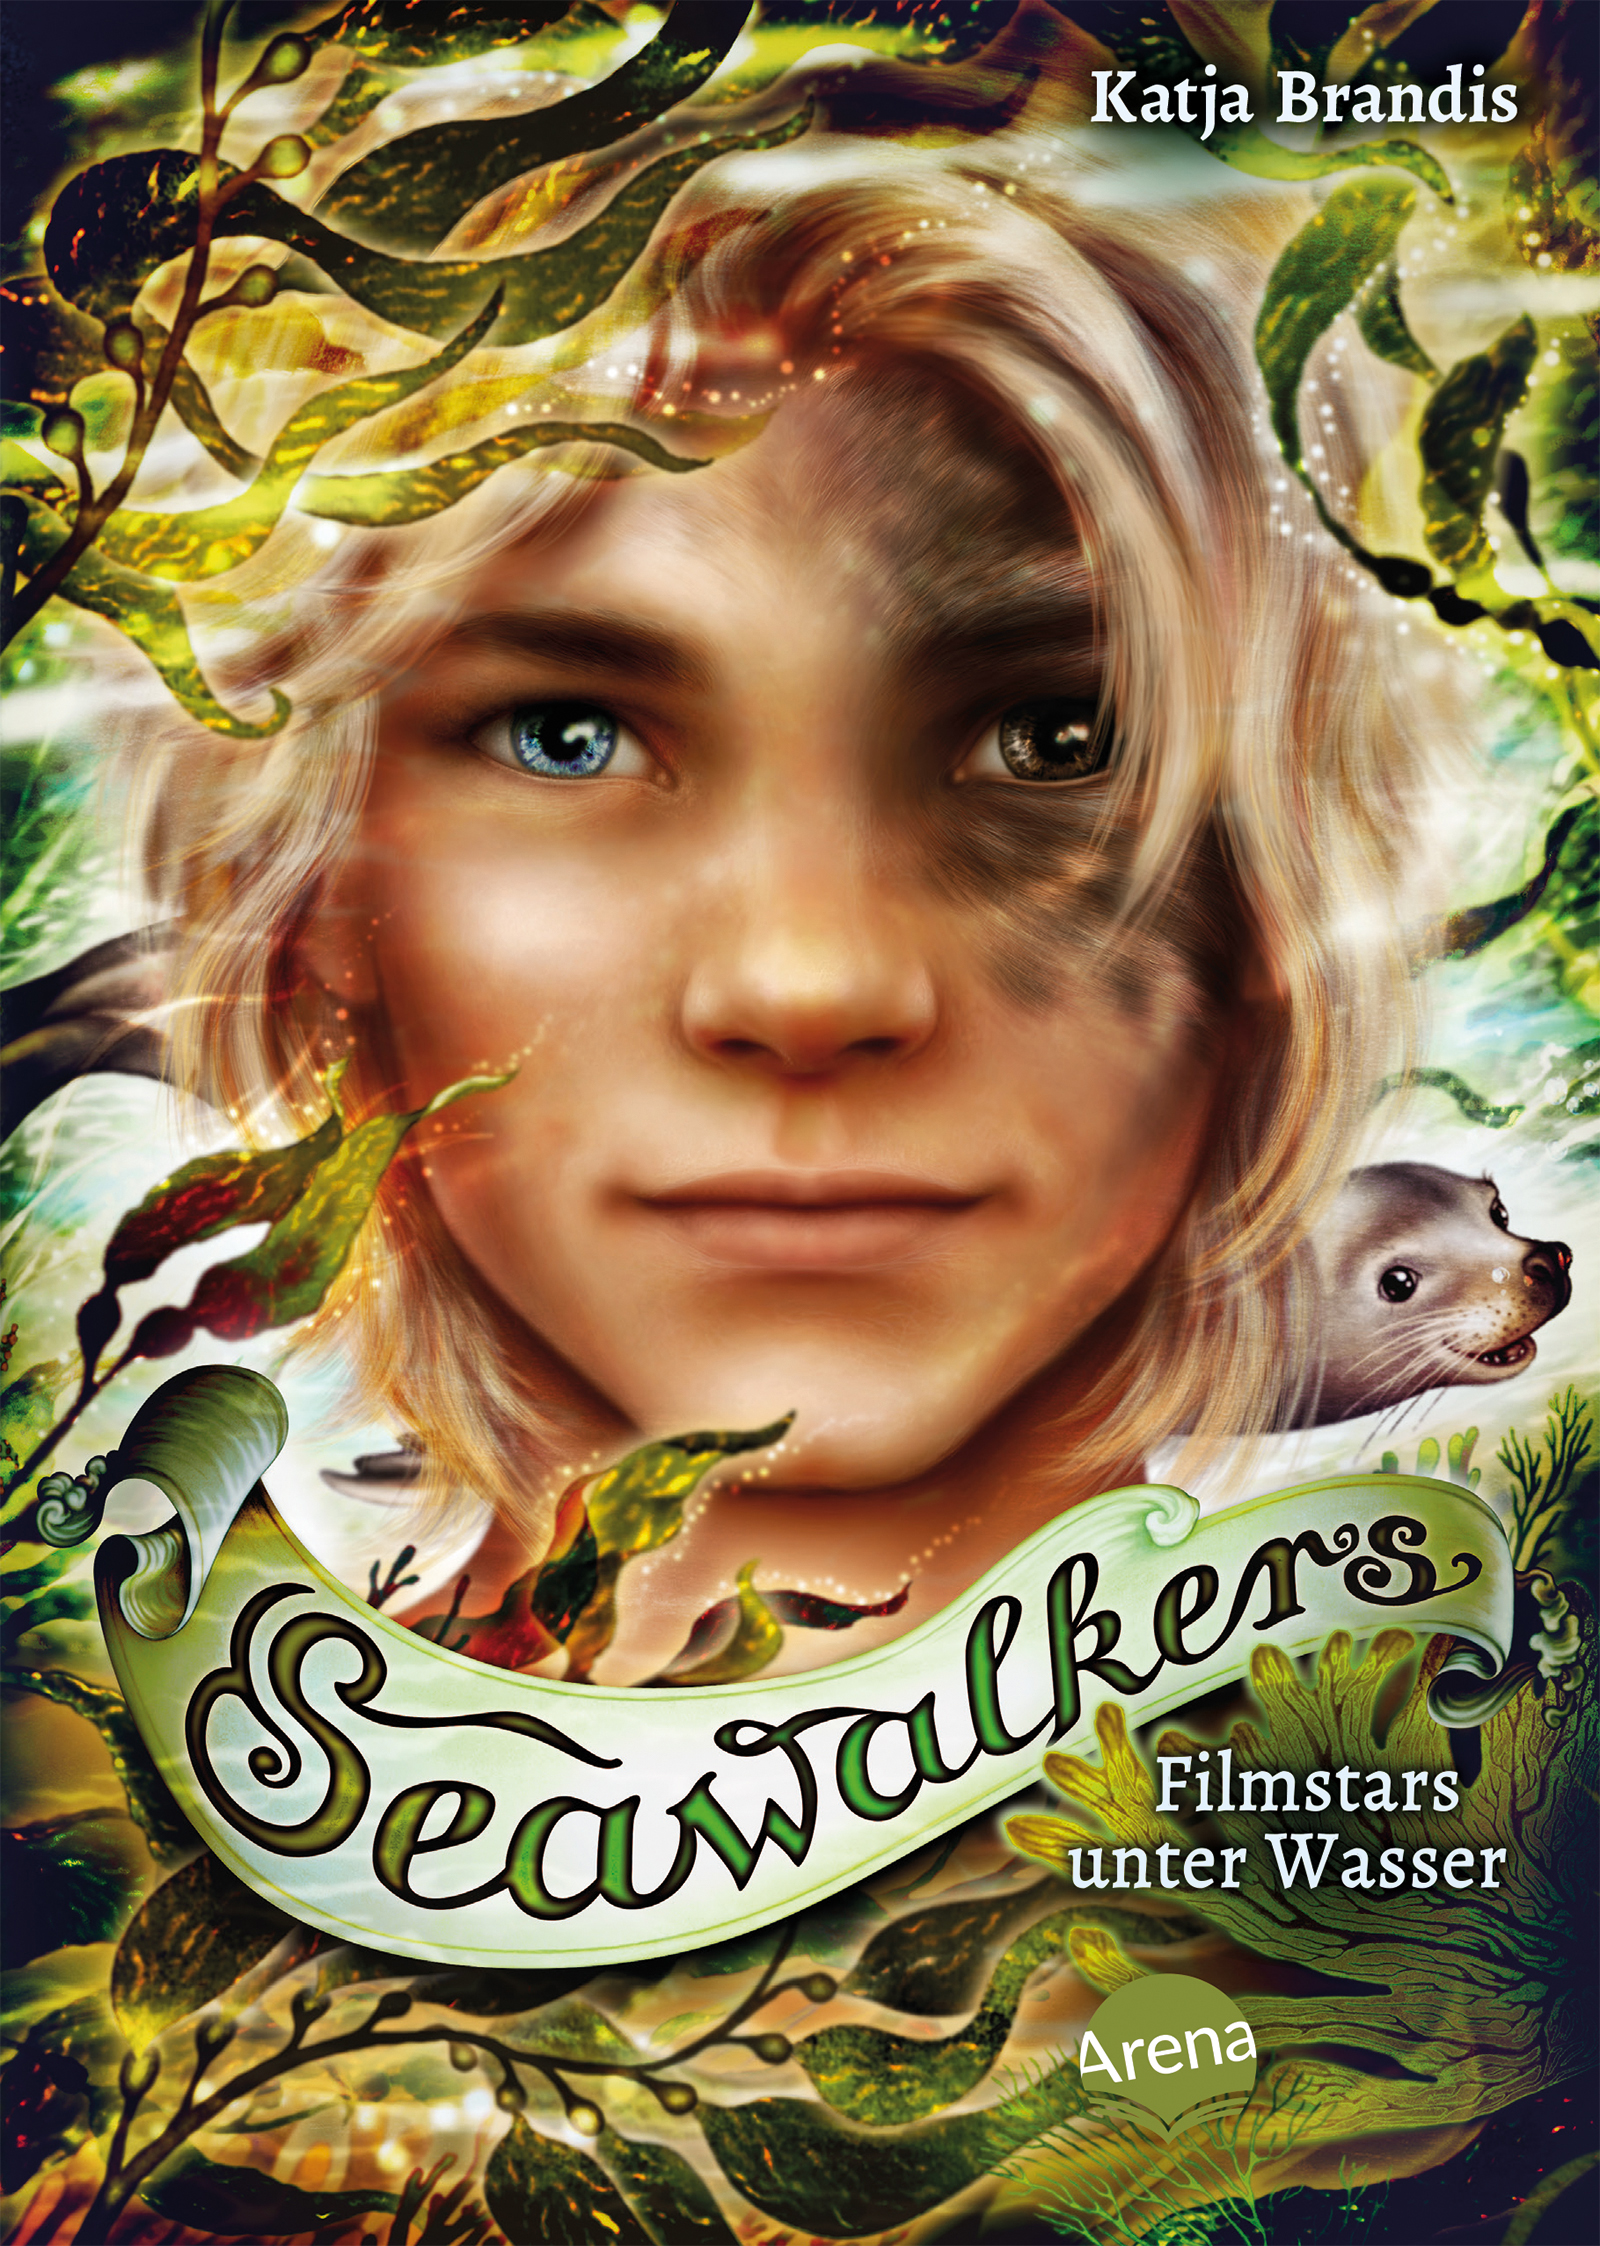 Katja BrandisSeawalkers – Filmstars unter Wasser (Band 5)